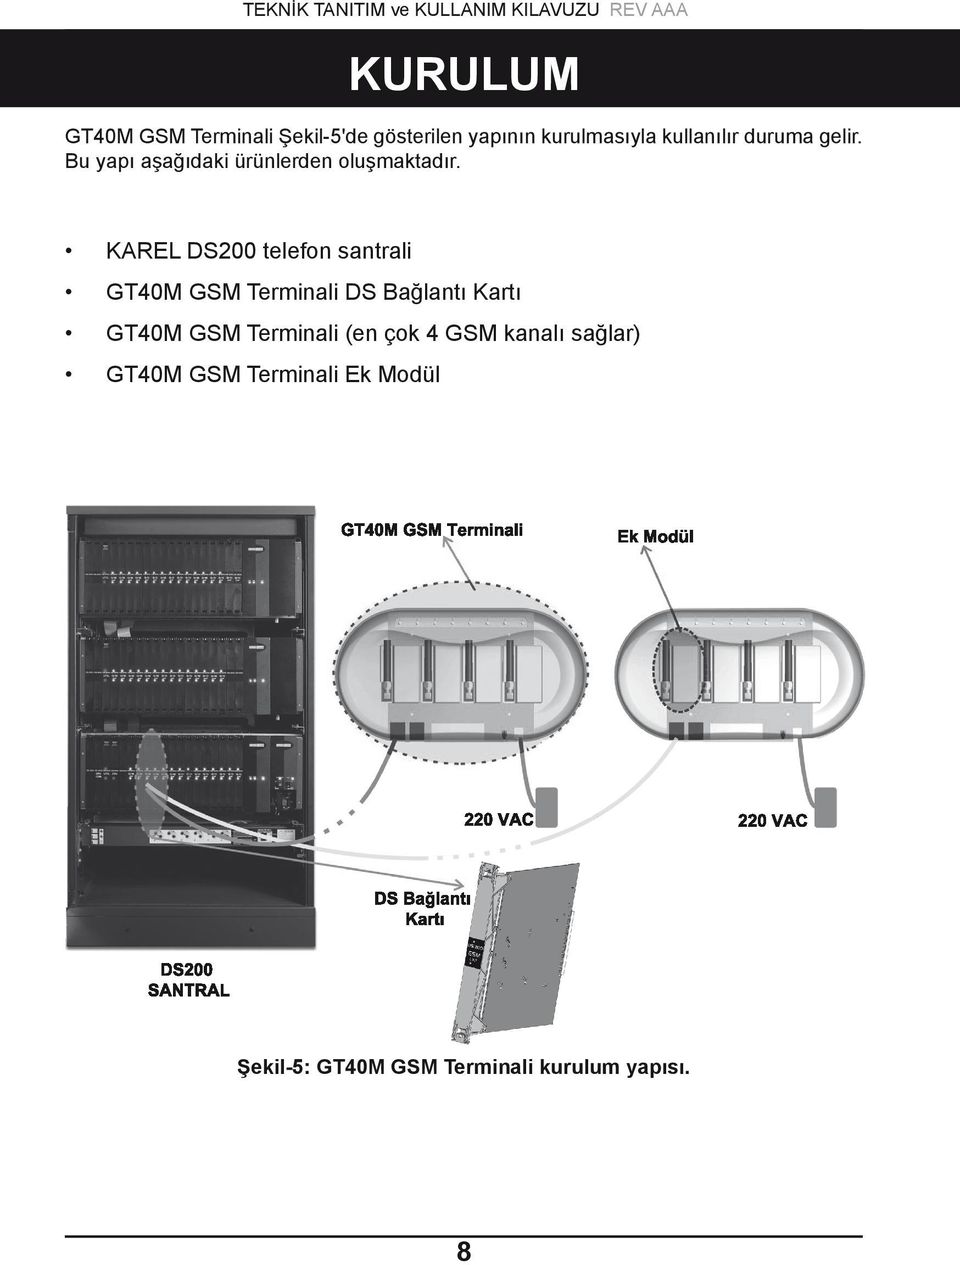 KAREL DS200 telefon santrali GT40M GSM Terminali DS Bağlantı Kartı GT40M GSM Terminali (en